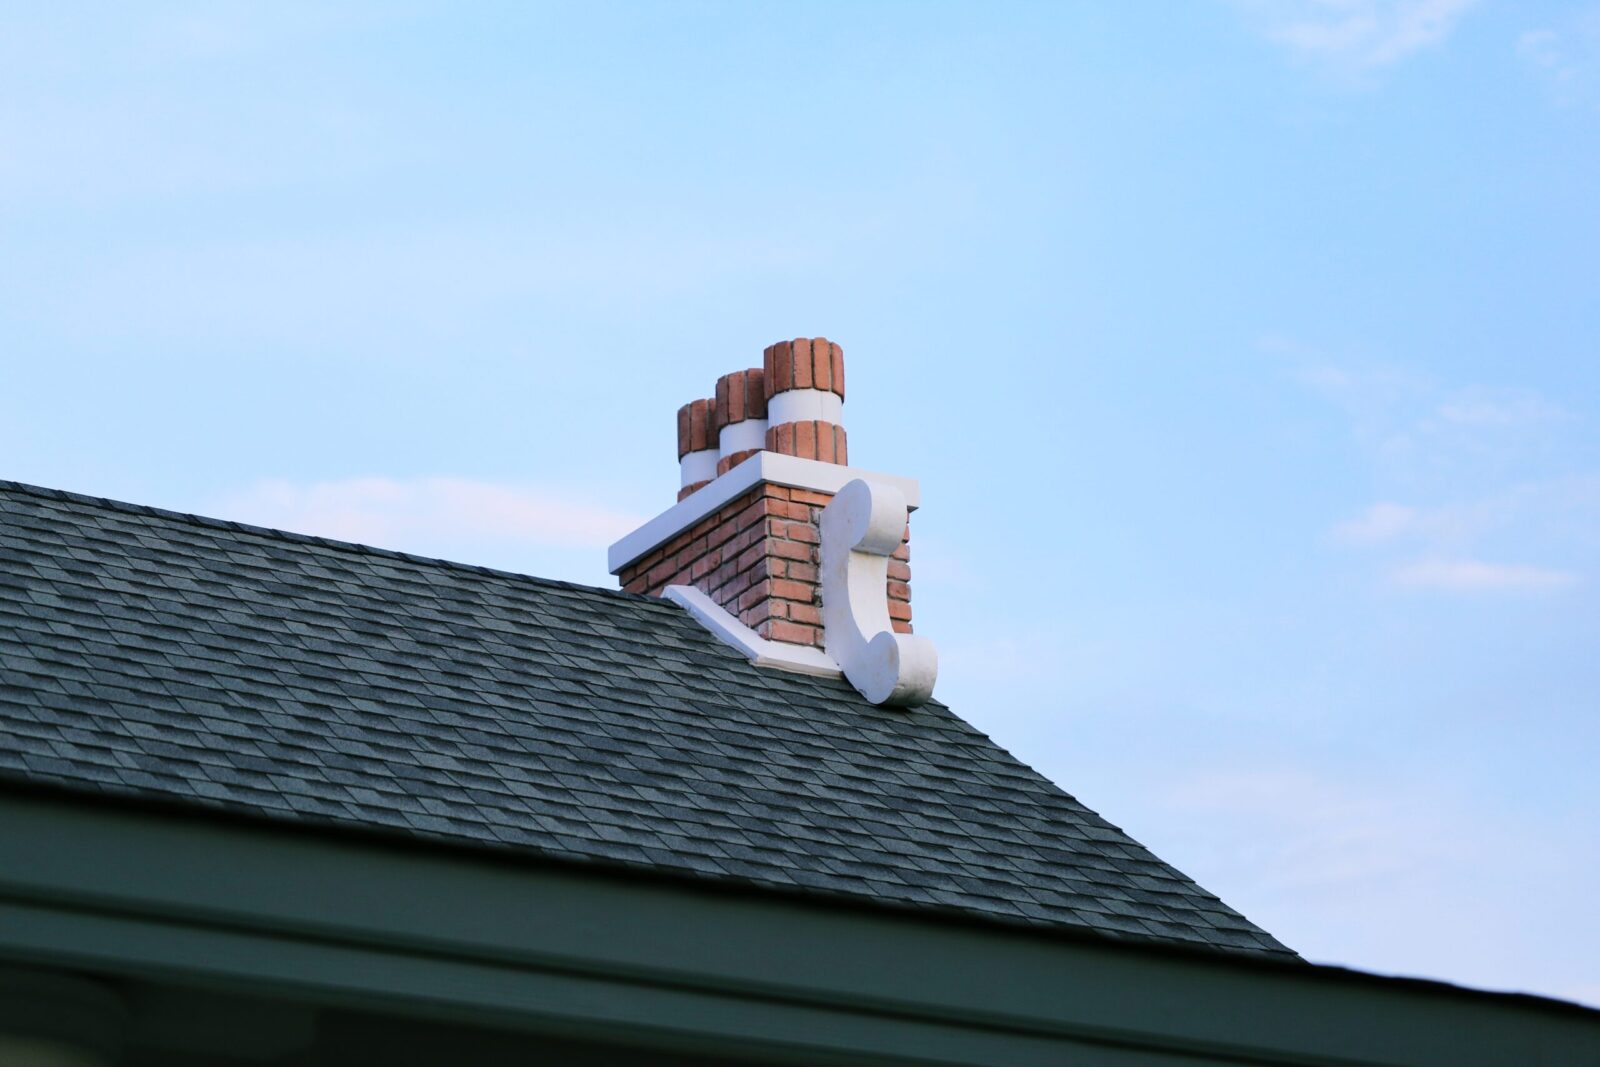 chimney on house roof closeup blue sky background 2021 04 06 03 44 24 utc scaled